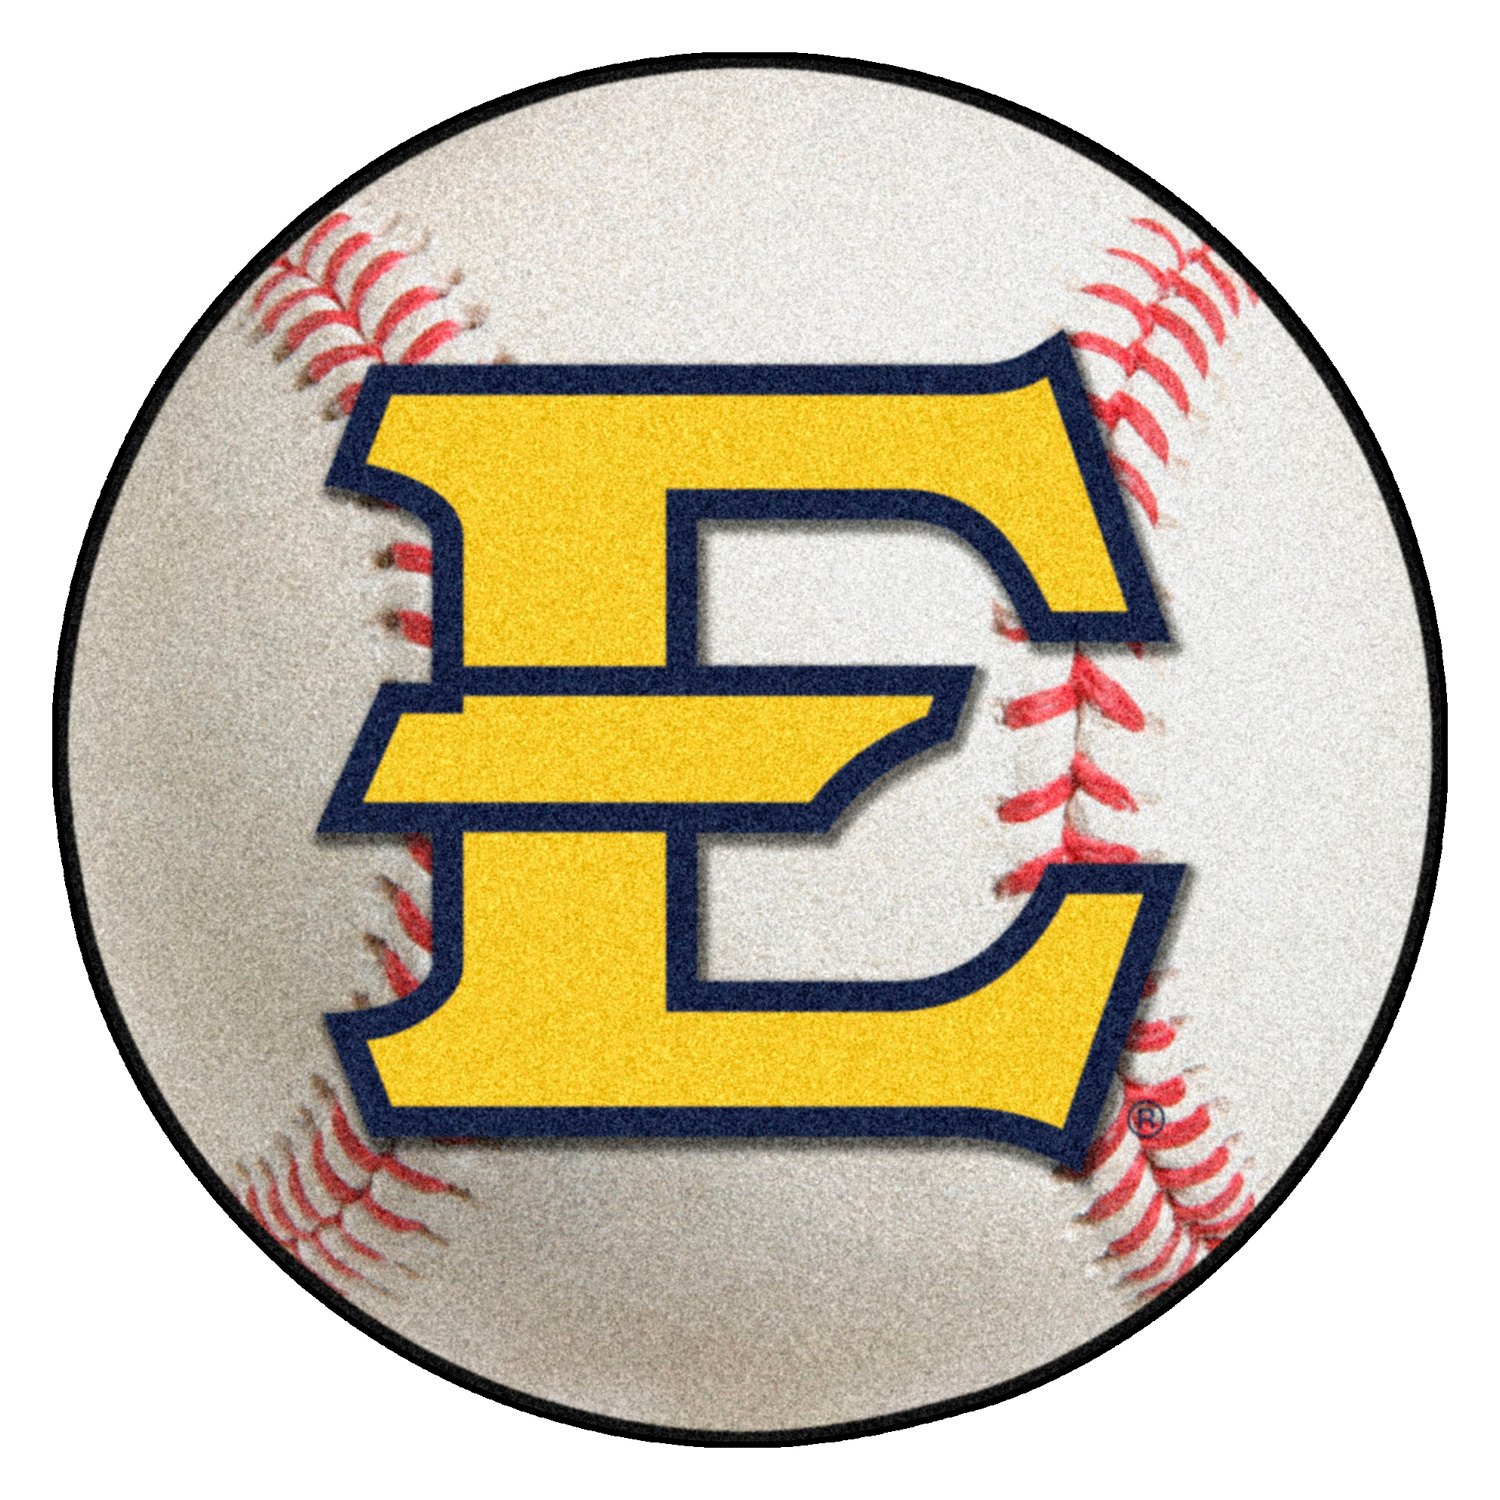 FanMats® 441 "Baseball" NCAA East Tennessee State University Round